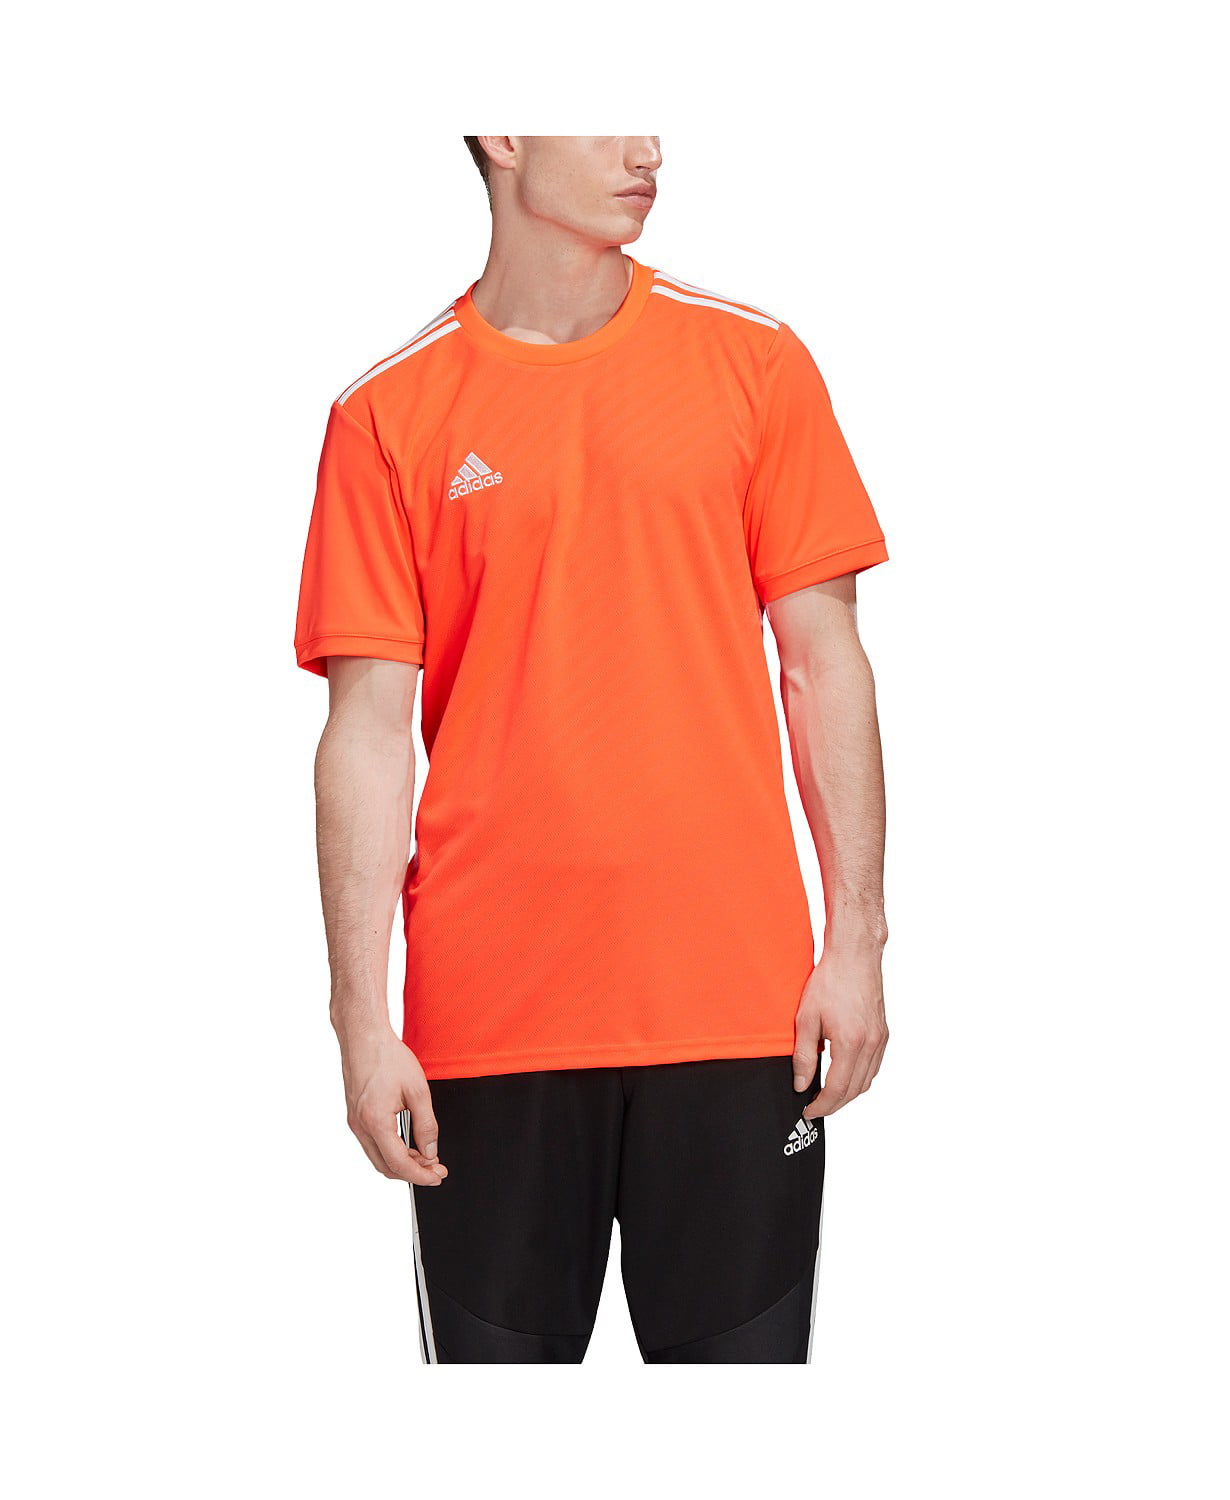 Adidas Estro 19 Jersey in Orange - Size S